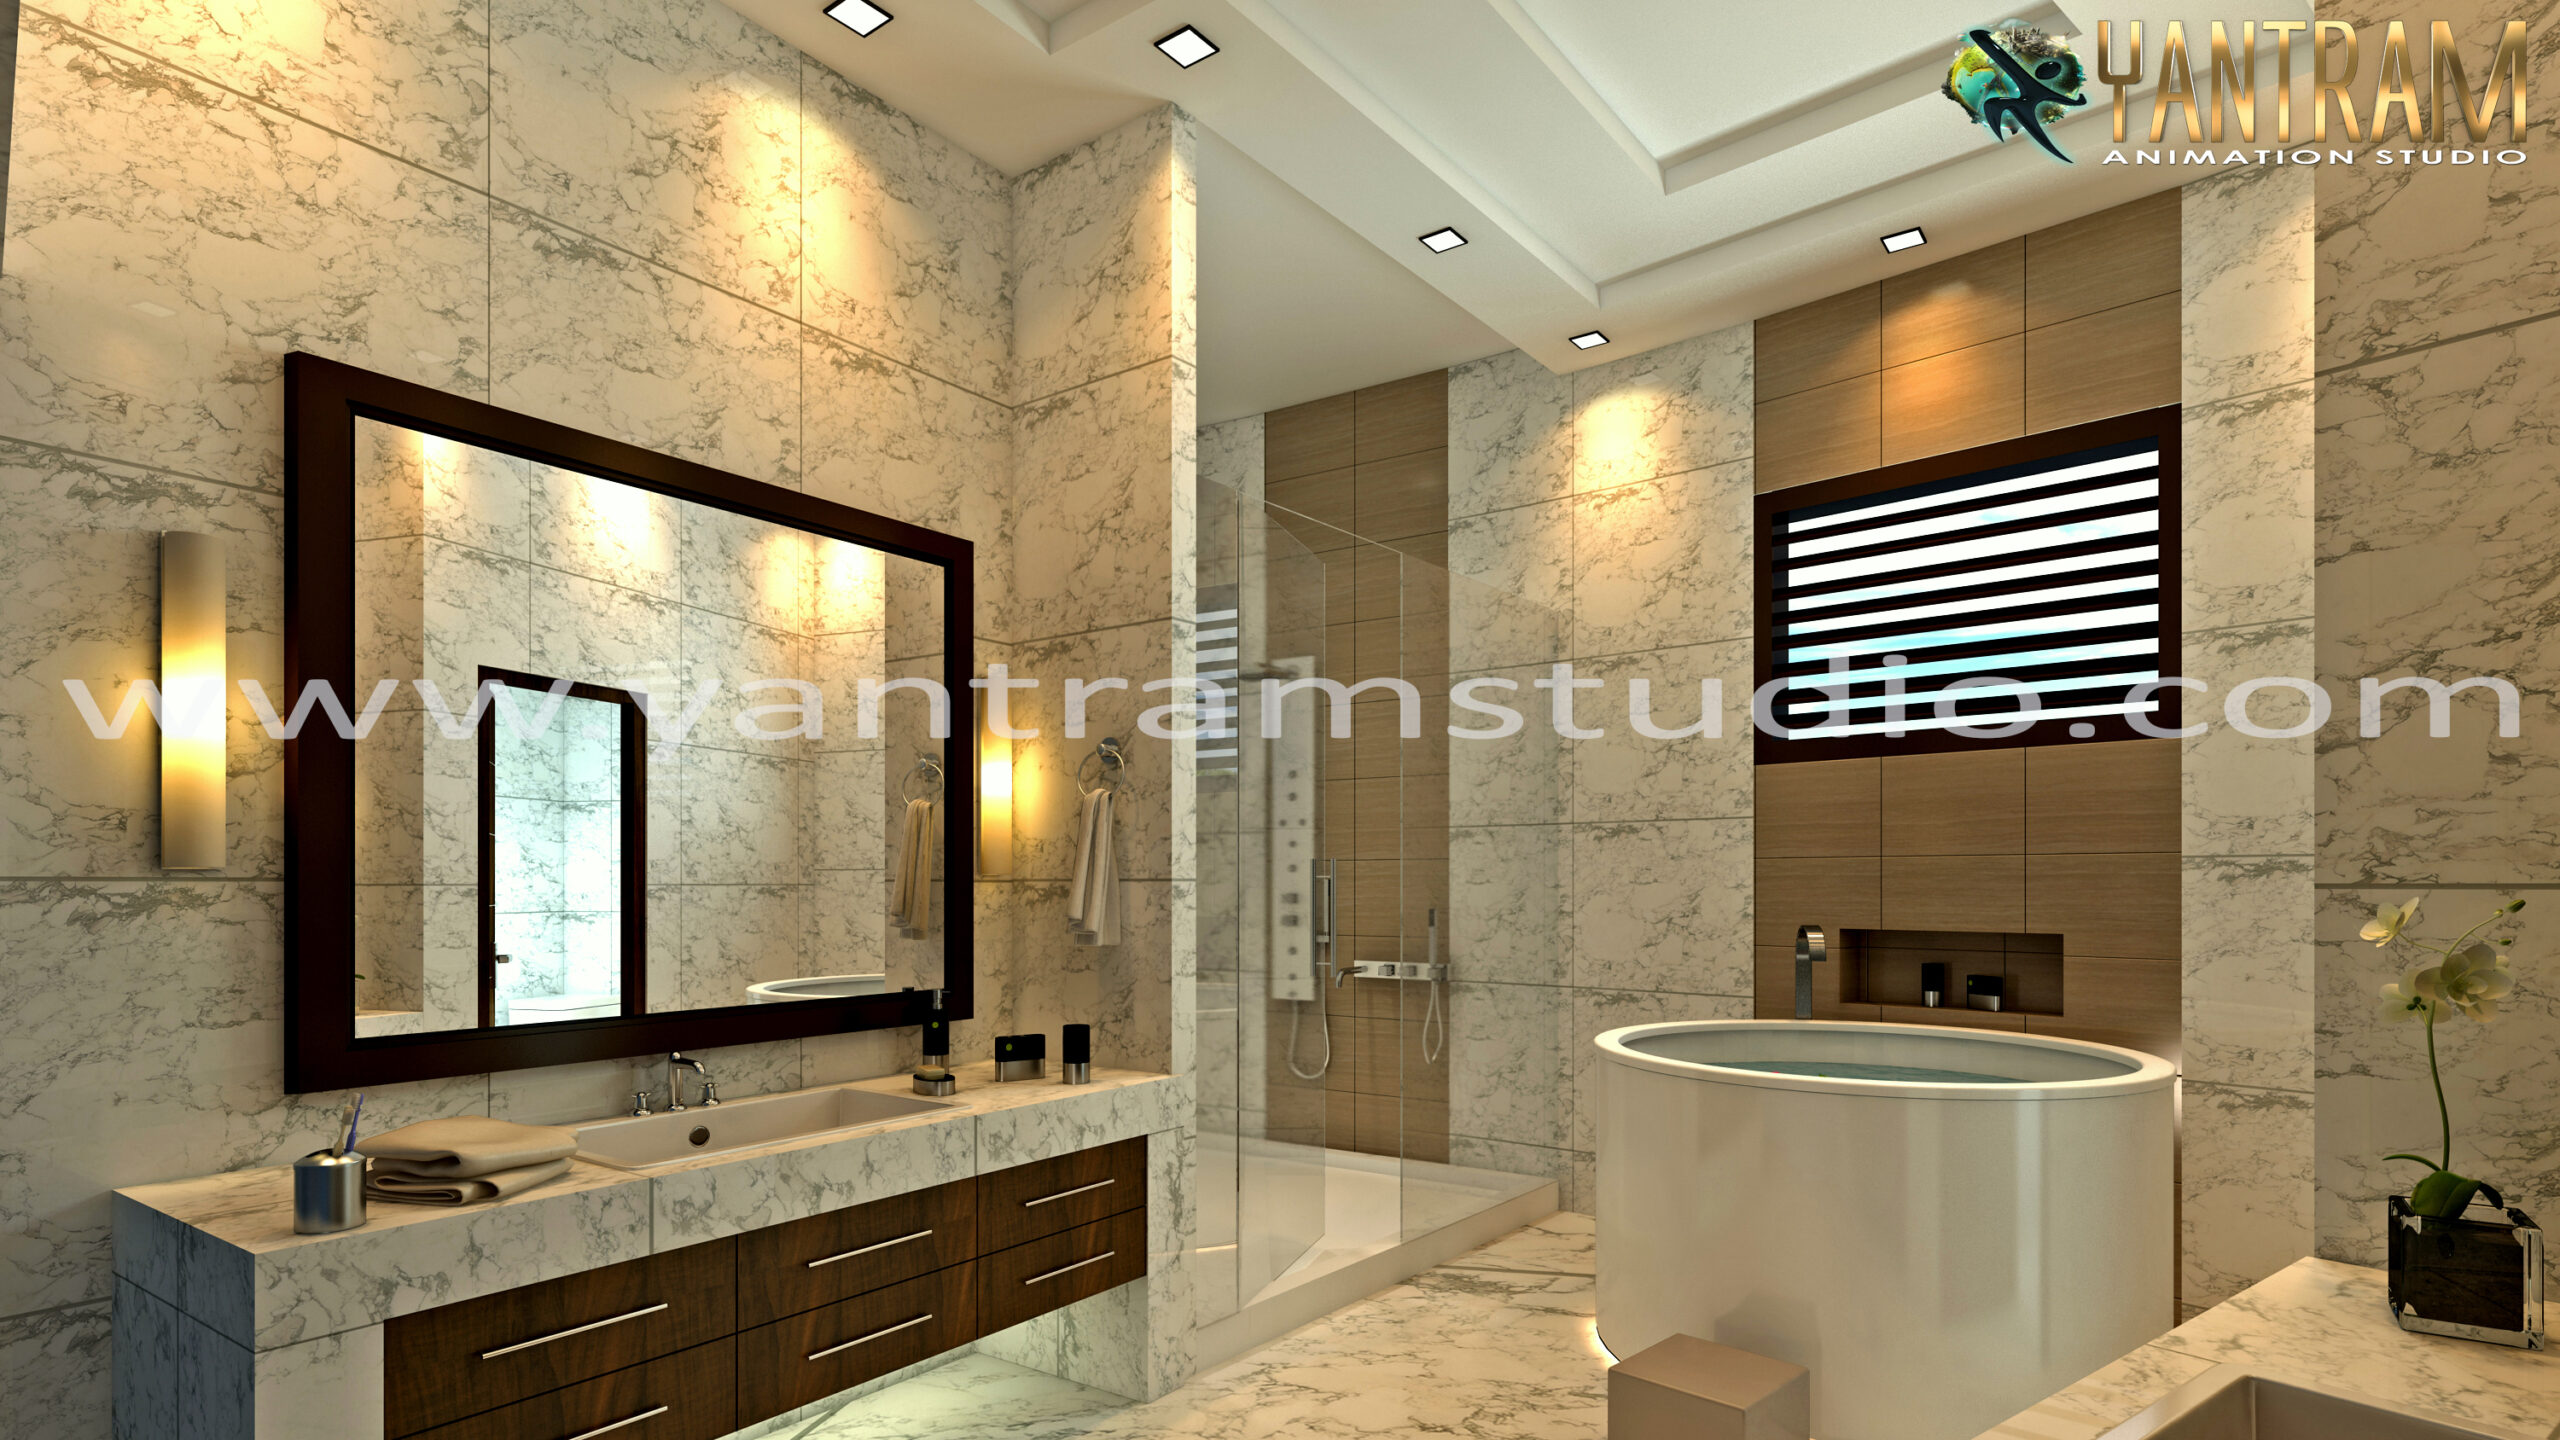 A Creative Bathroom Design Studio by Interior Design For Home by Yantram Architectural Animation Studio-Chicago, Illinois